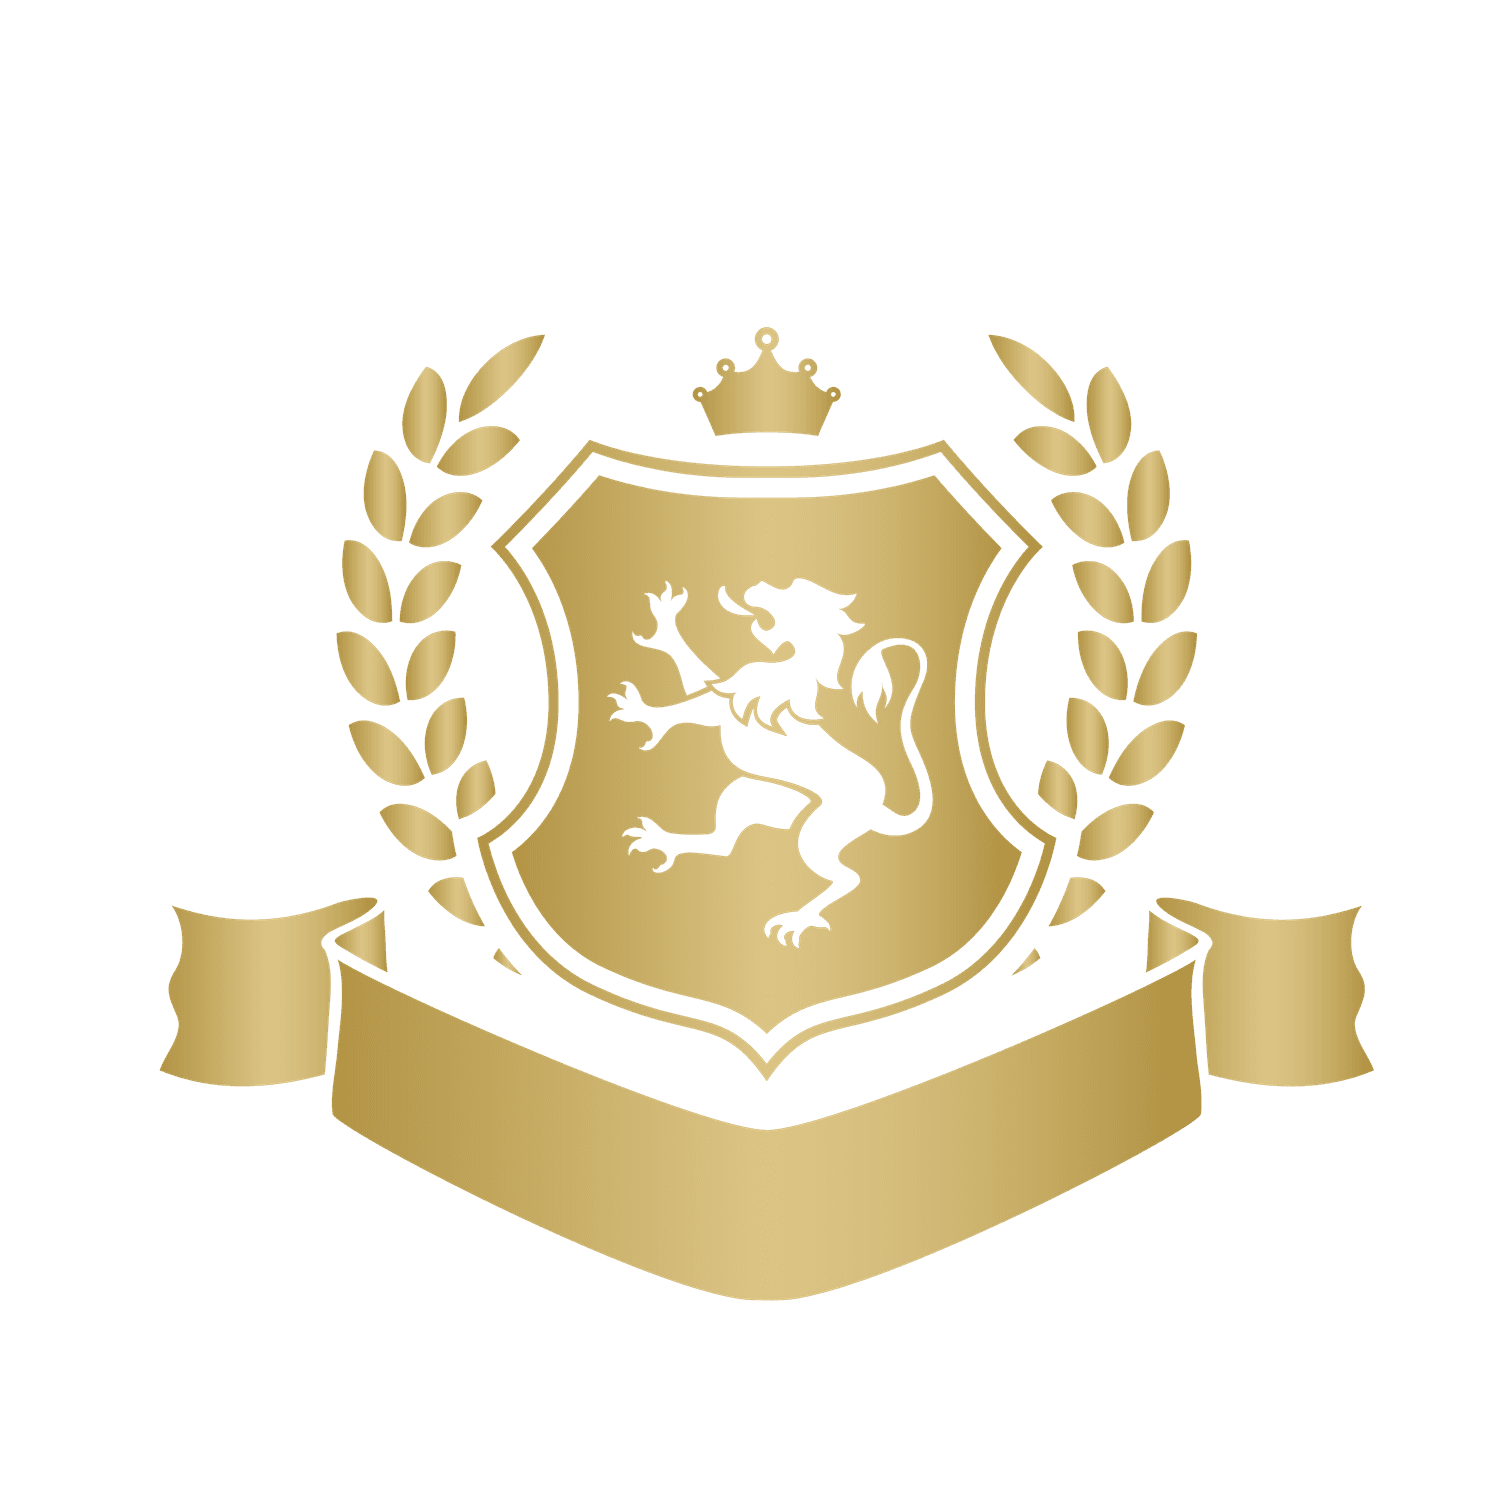 royal emblem with lion, laurel wreath, and ribbon